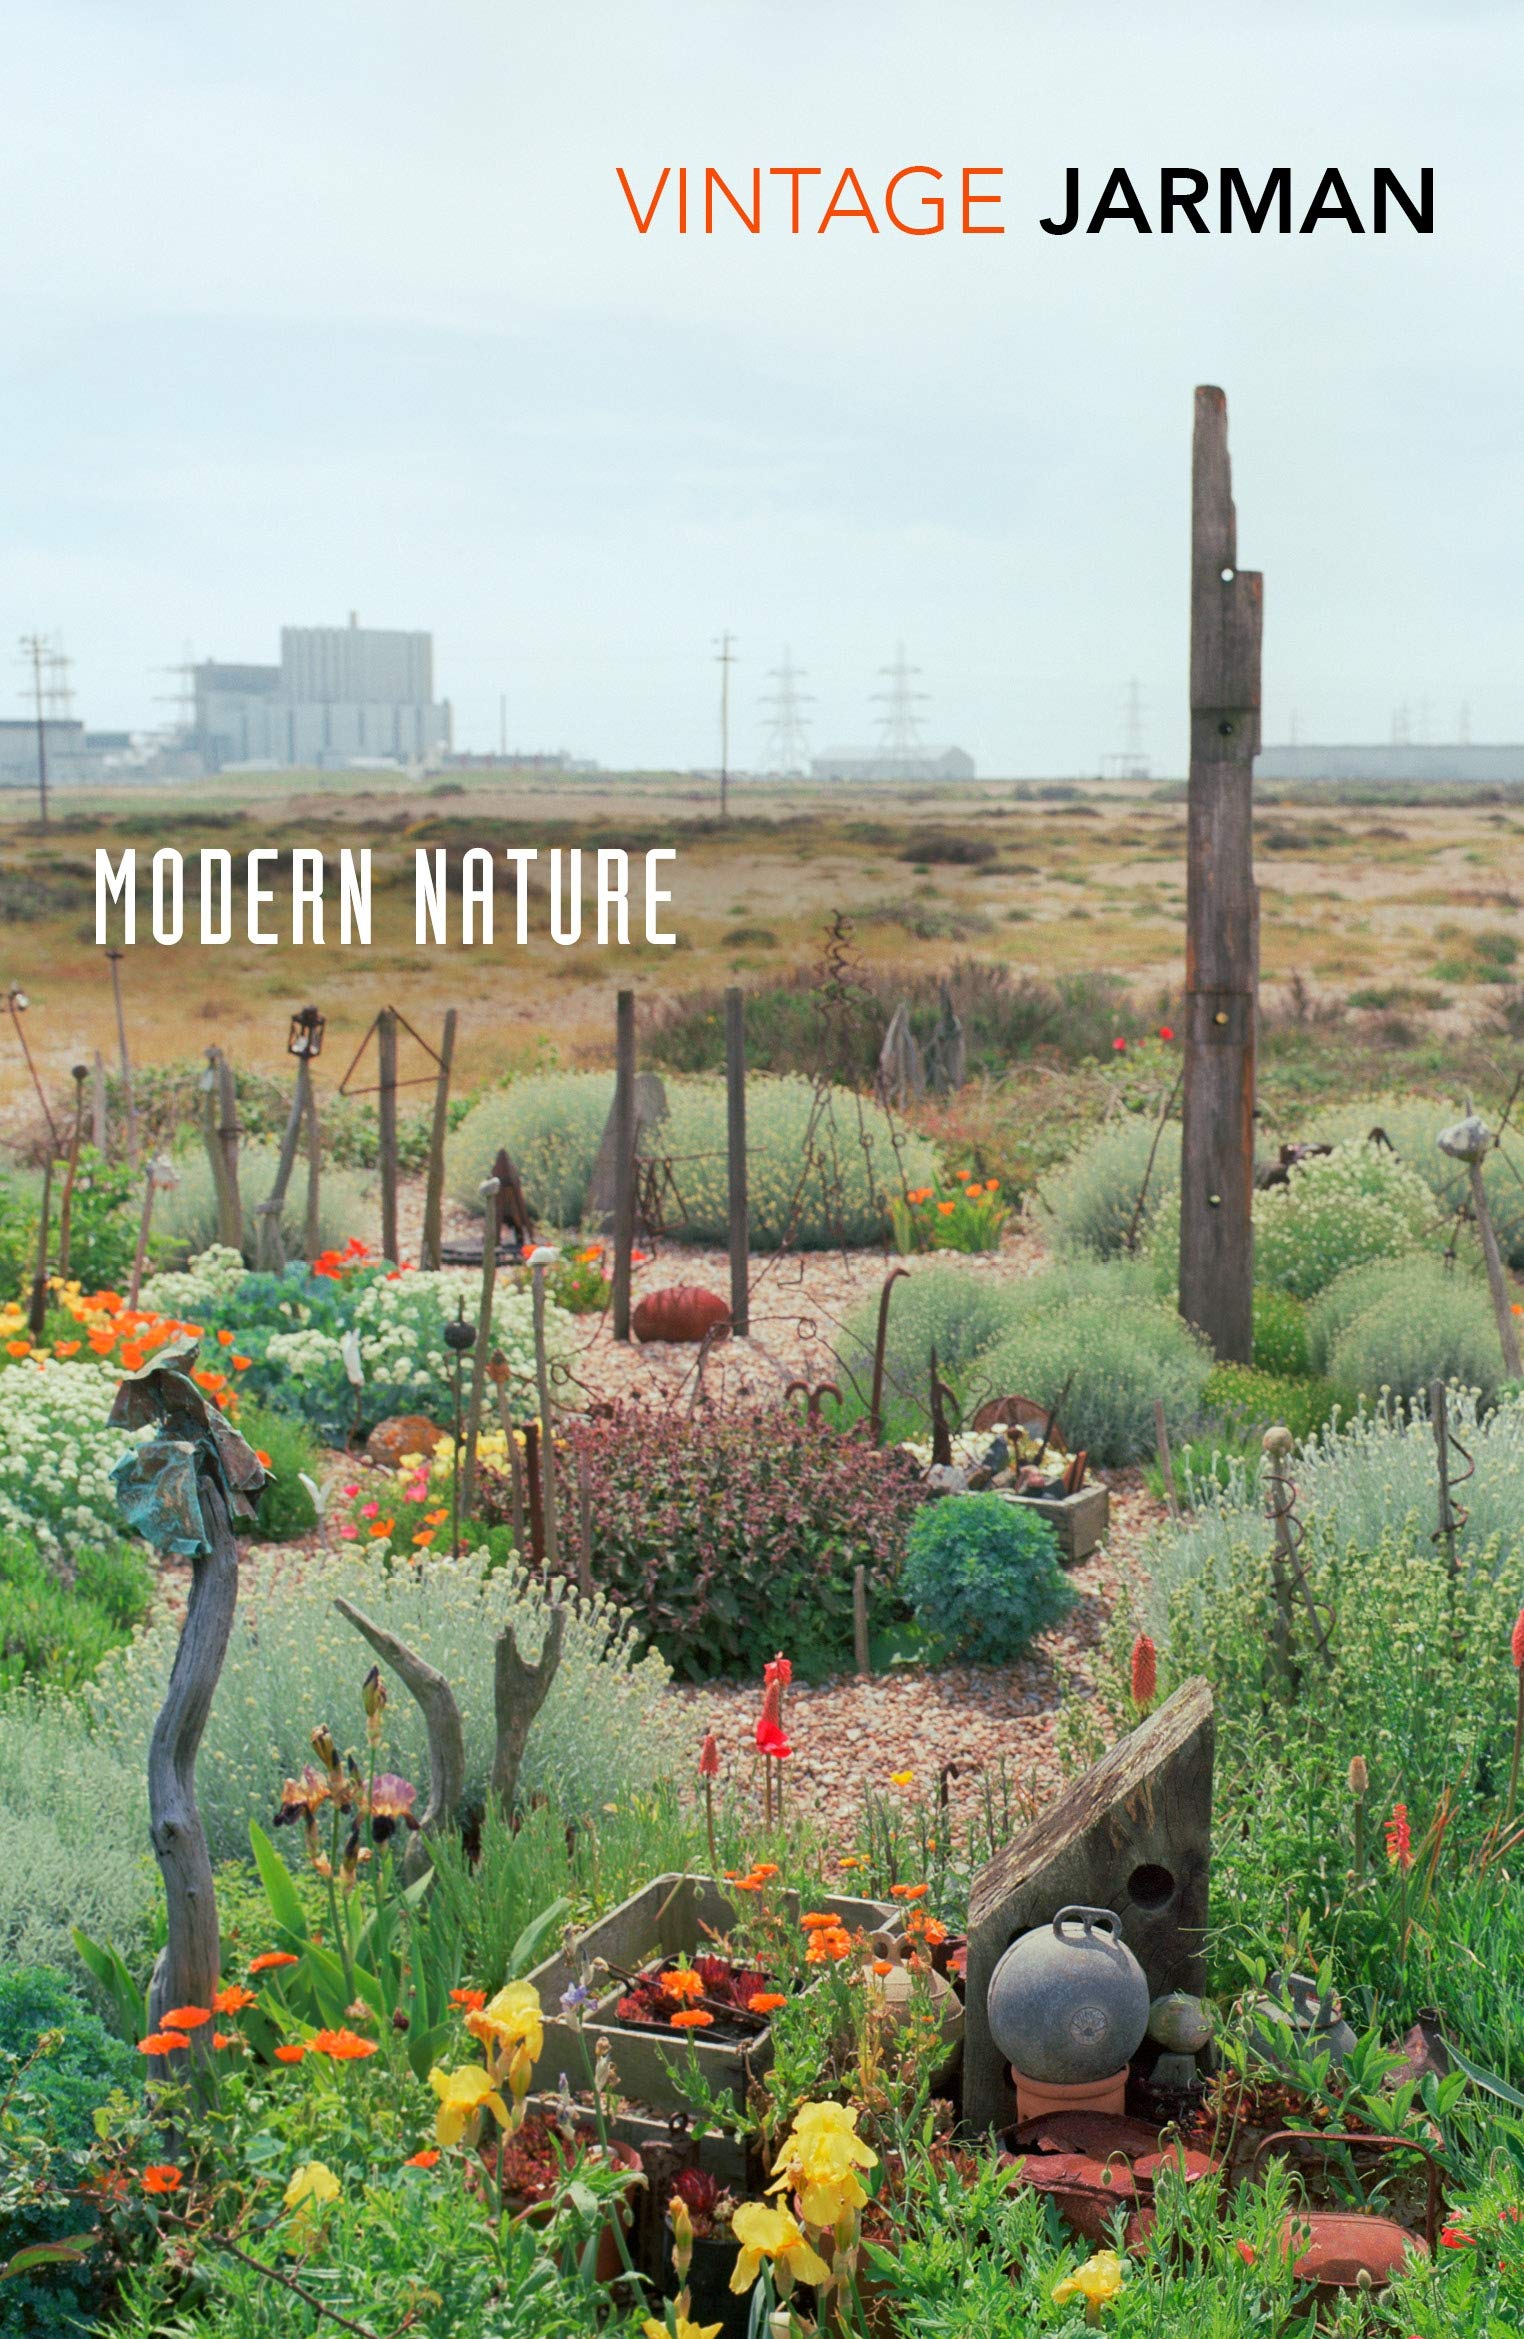 Derek Jarman: Modern Nature